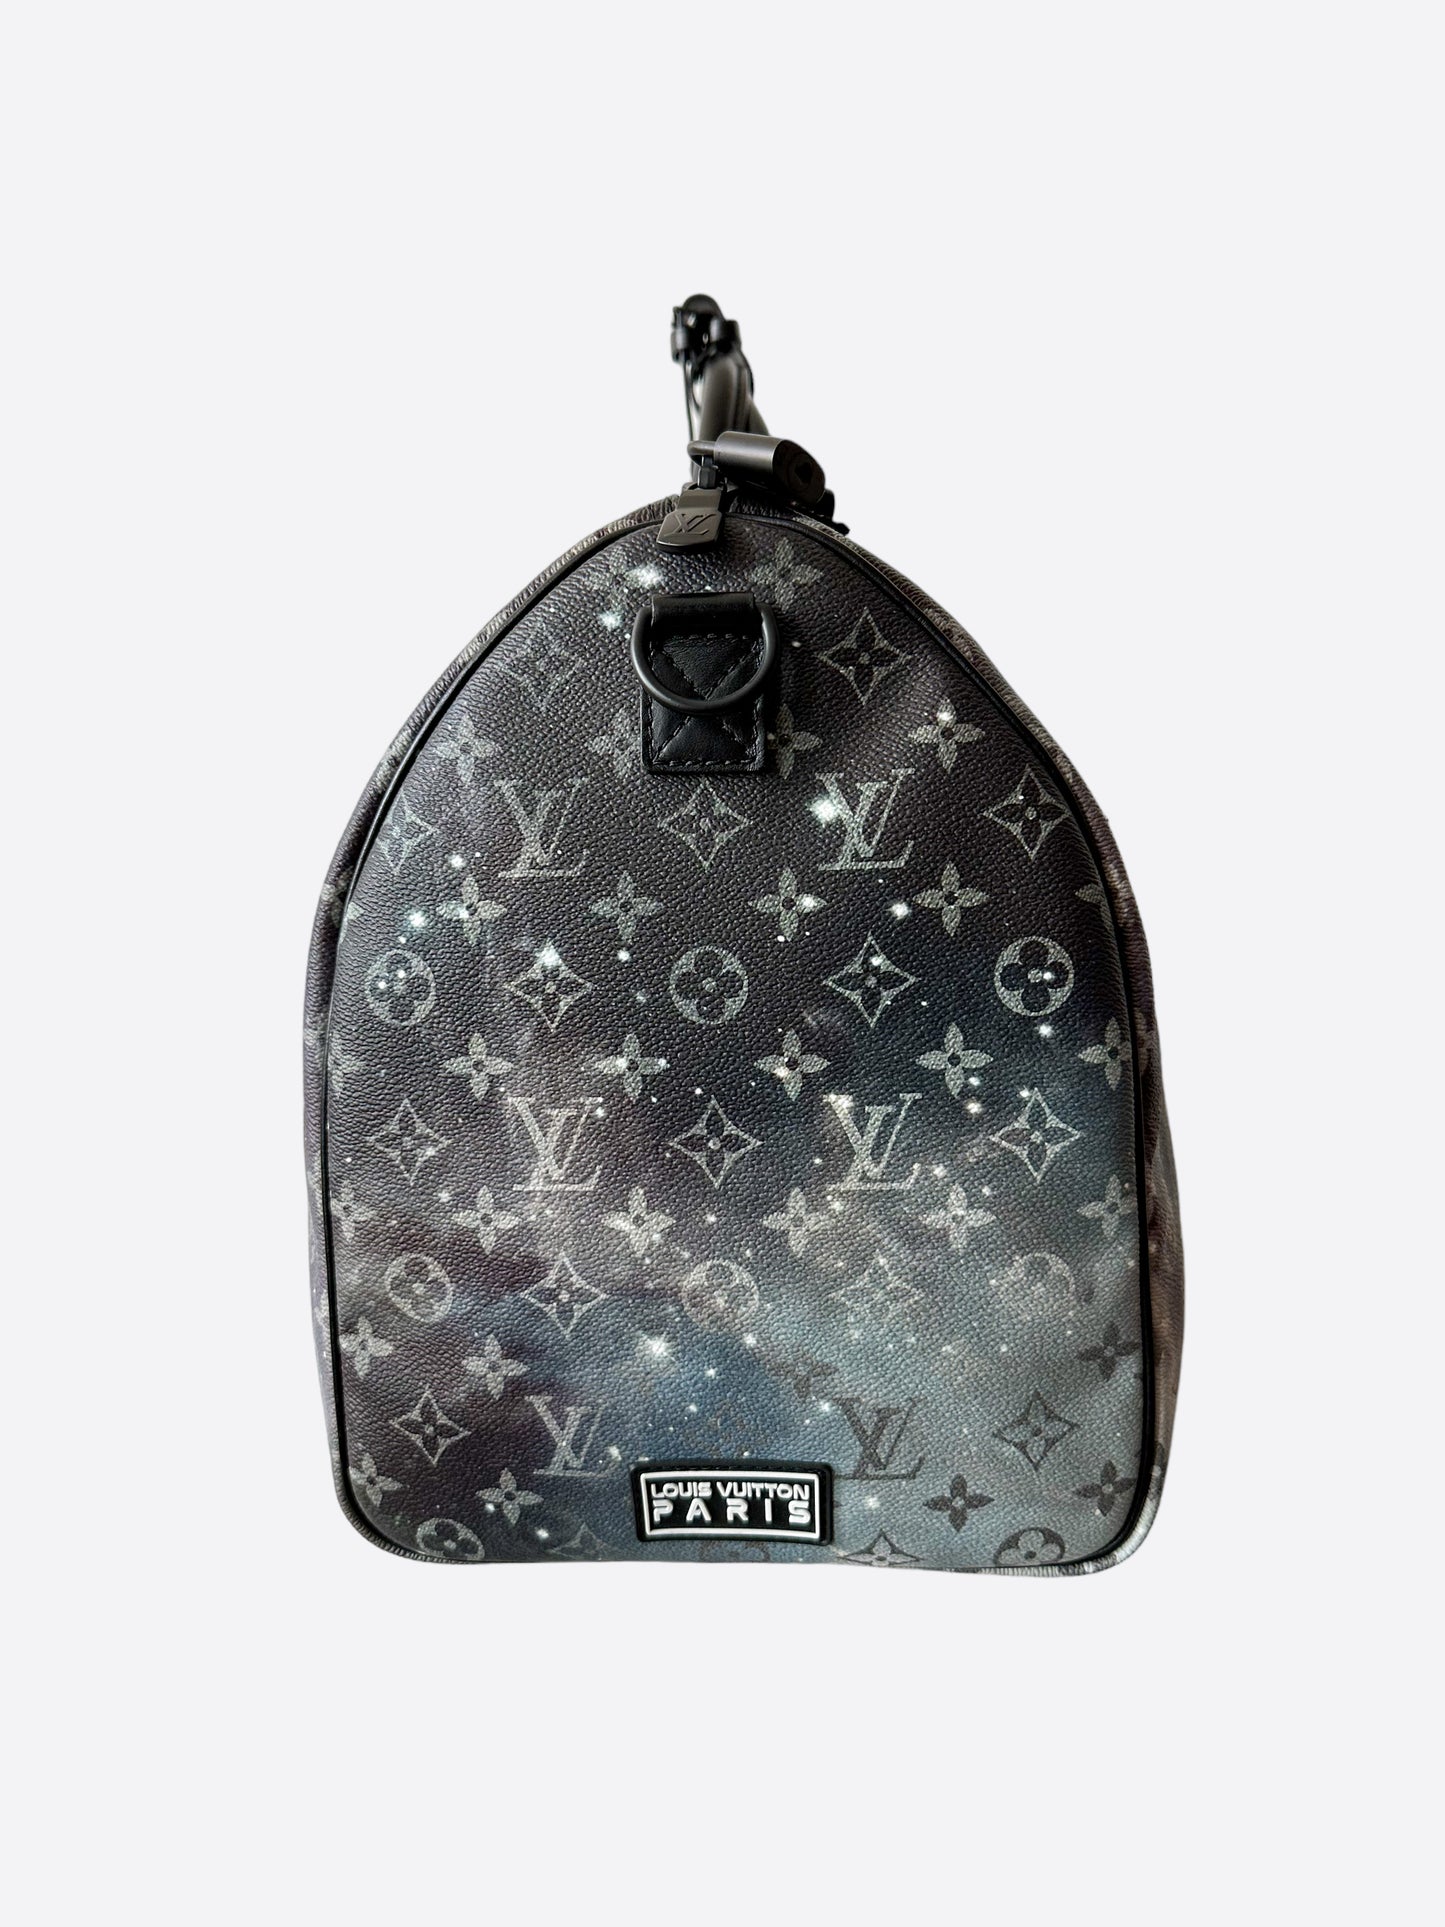 Louis Vuitton | Keepall Bandouliere Monogram Galaxy | M44166